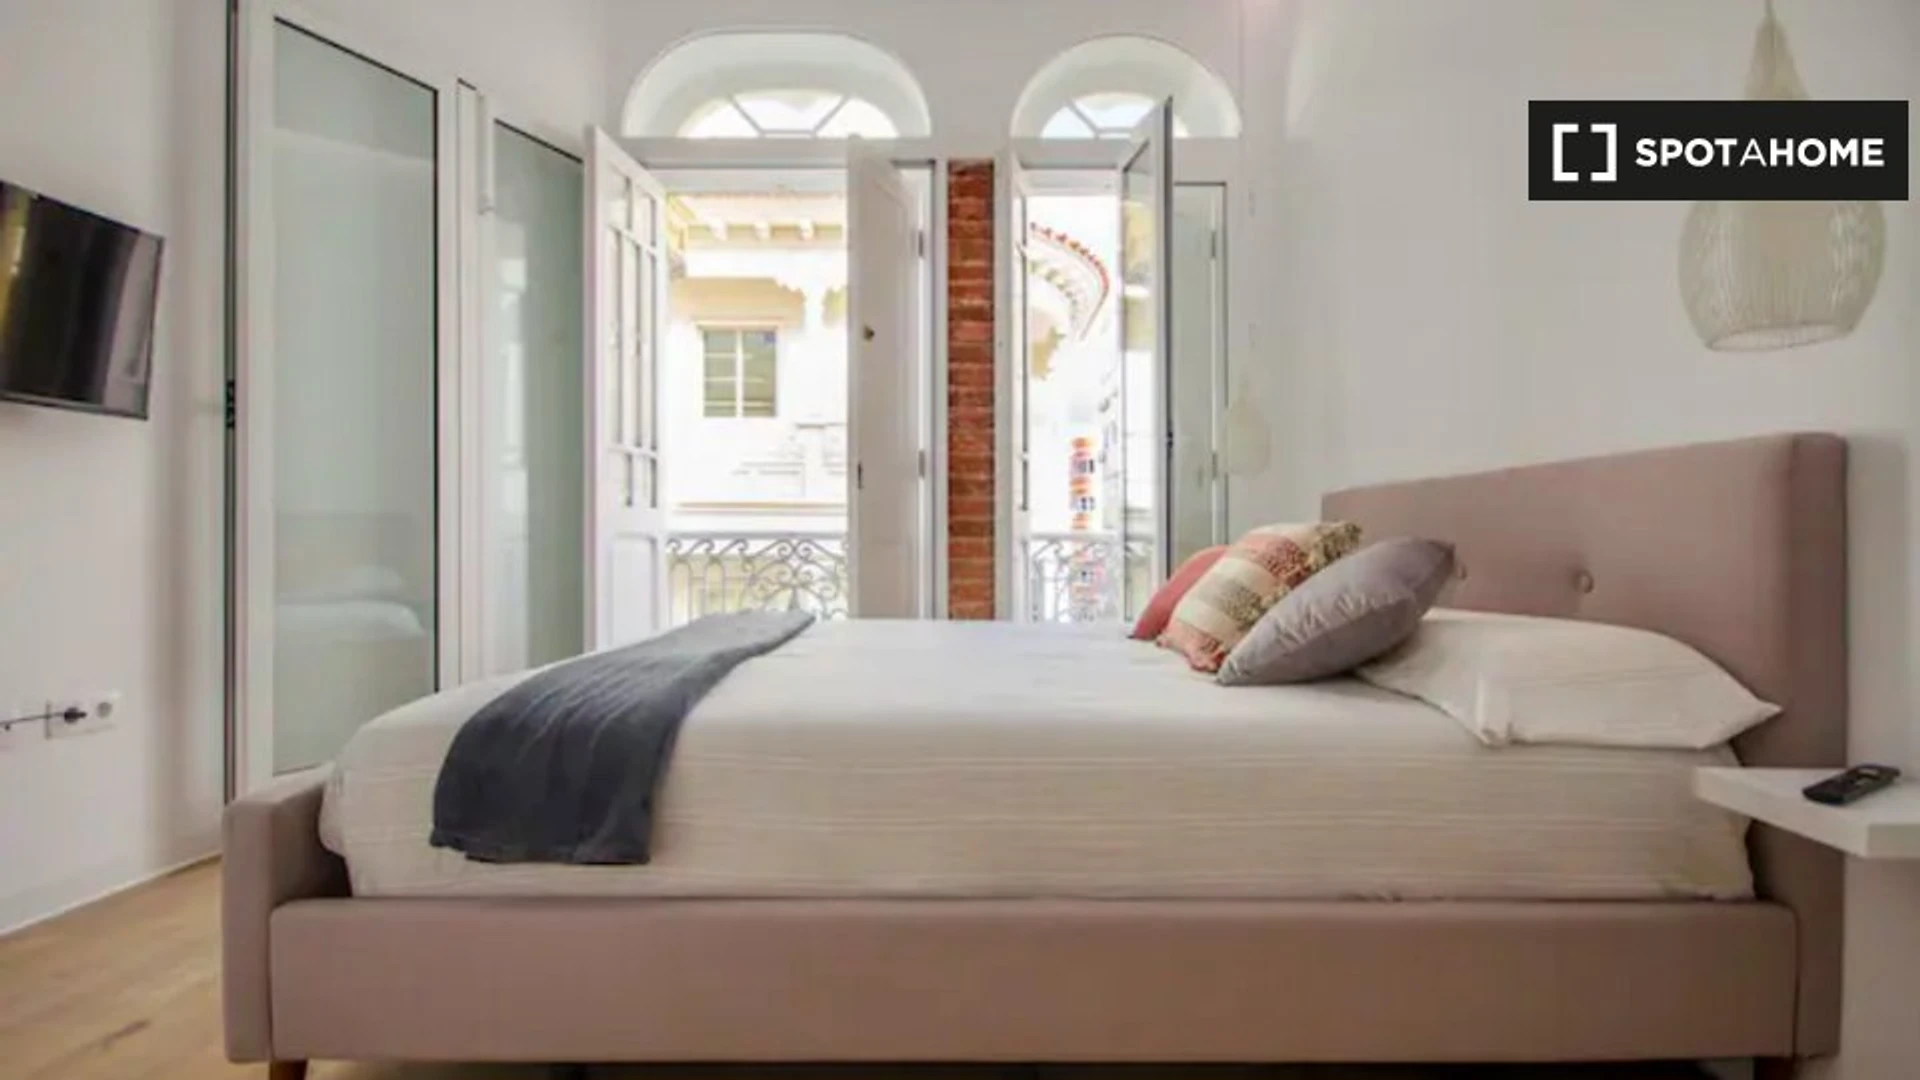 Room for rent in a shared flat in Santa Cruz De Tenerife